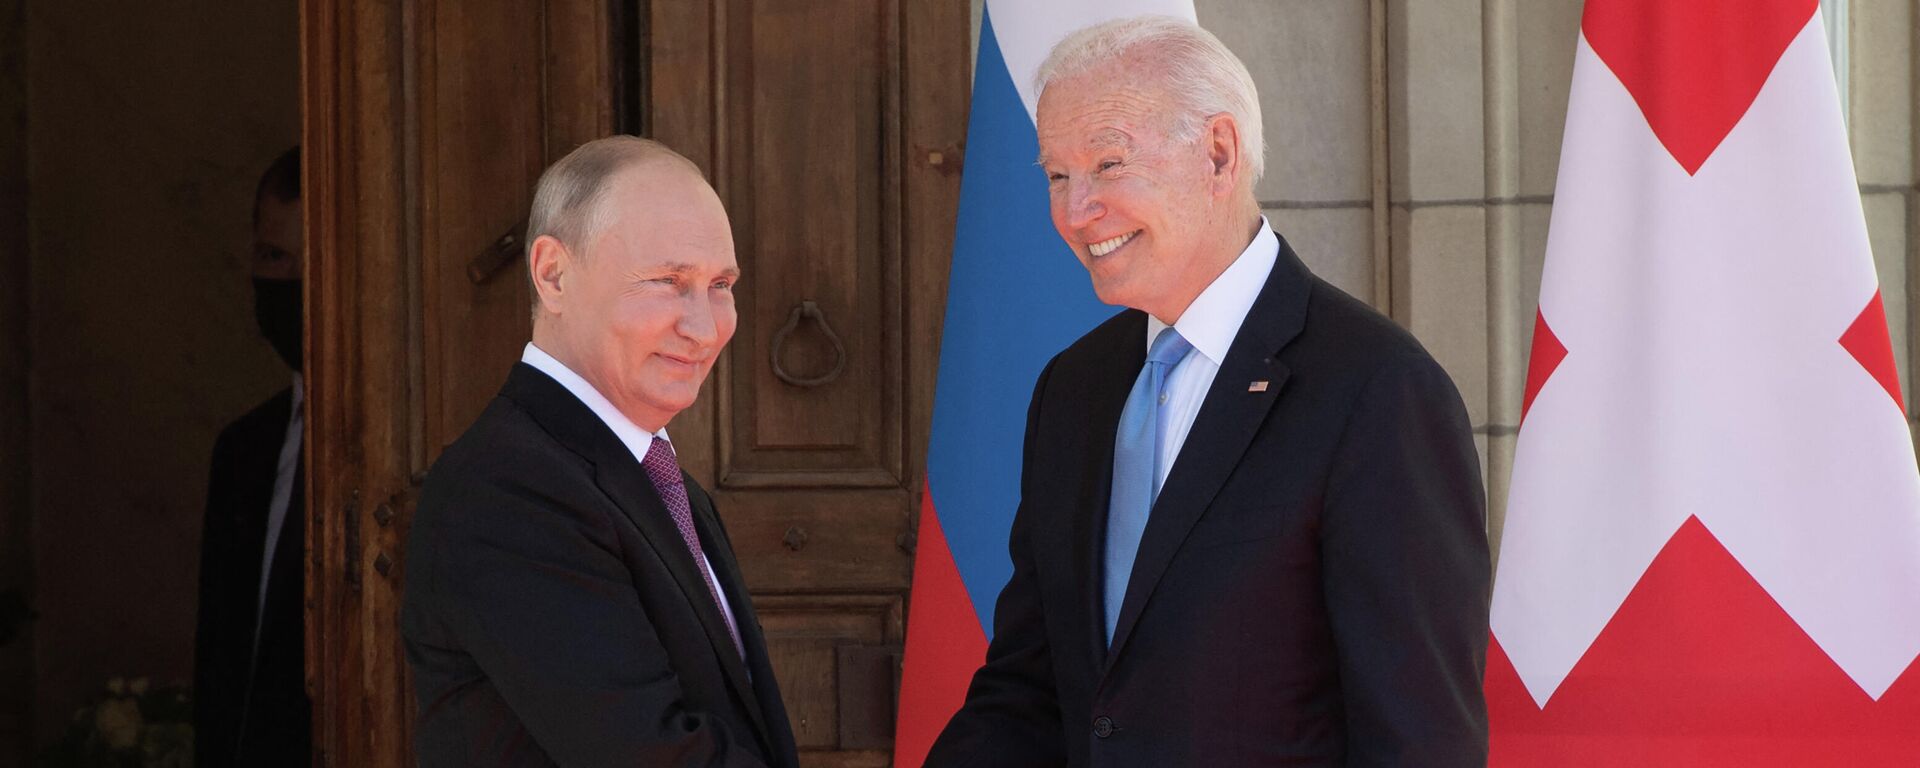 Президент США Джо Байден (справа) и президент России Владимир Путин - Sputnik Таджикистан, 1920, 06.12.2021